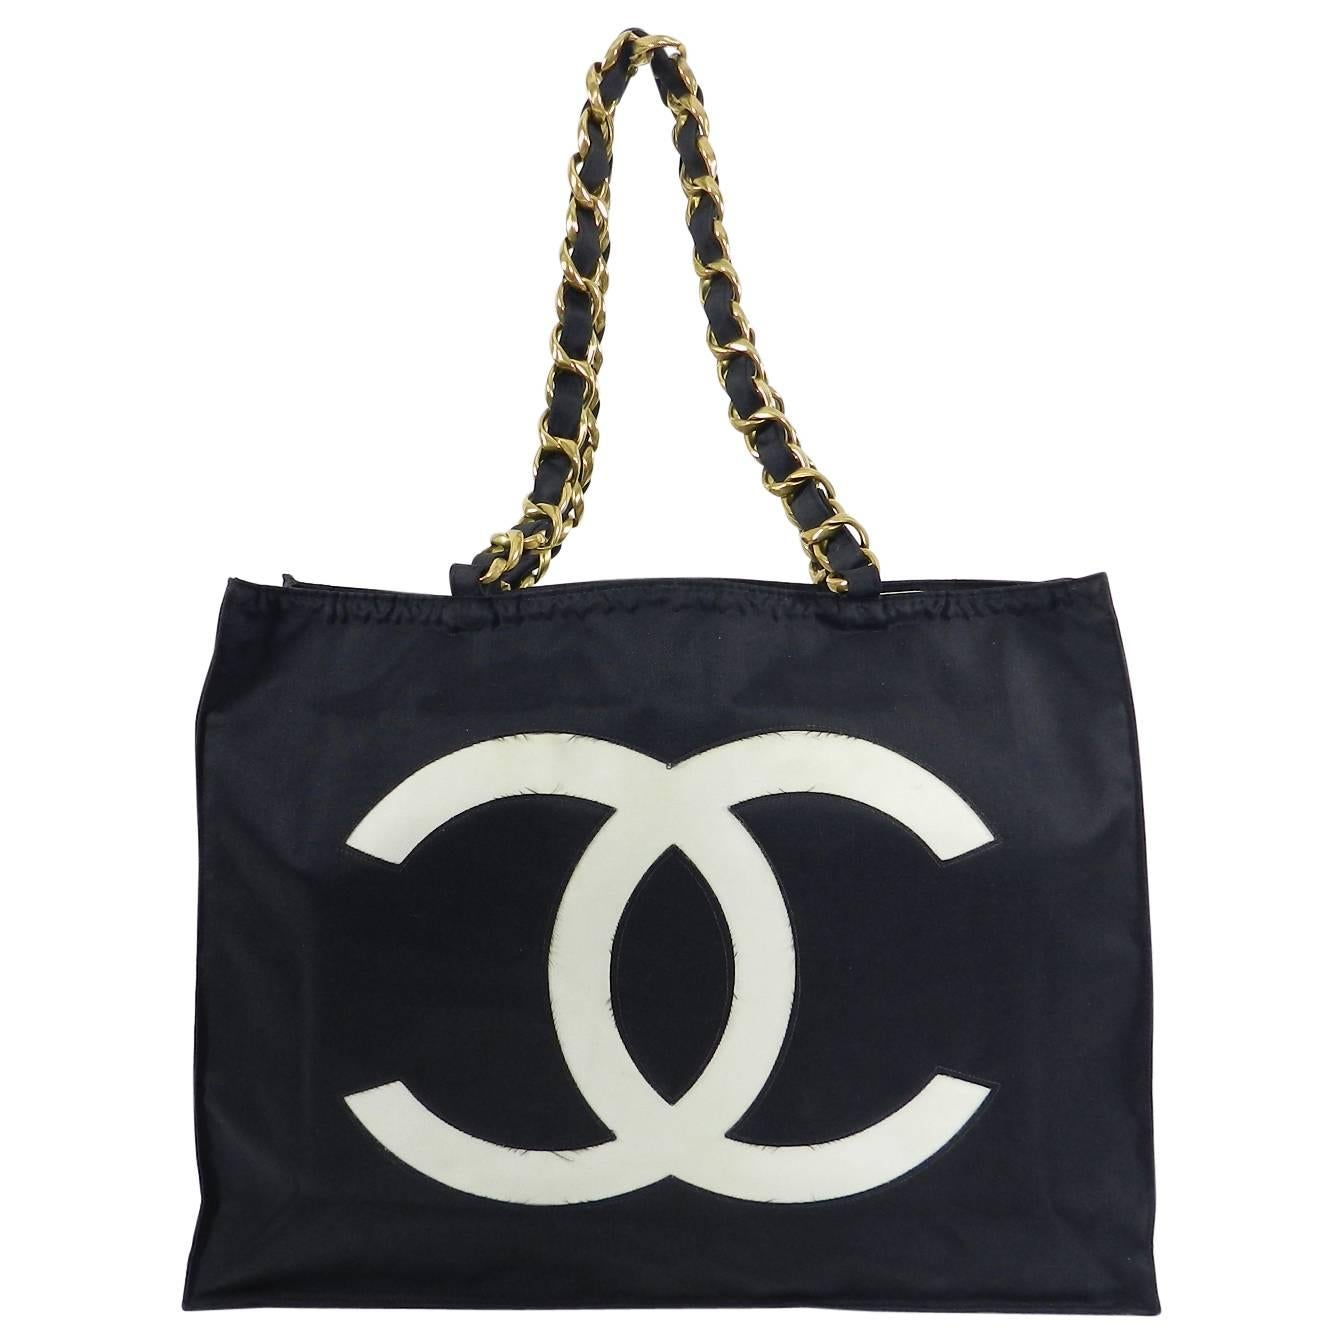 Chanel Vintage Black Nylon CC Logo Tote Bag with Gold Chain Straps, 1991